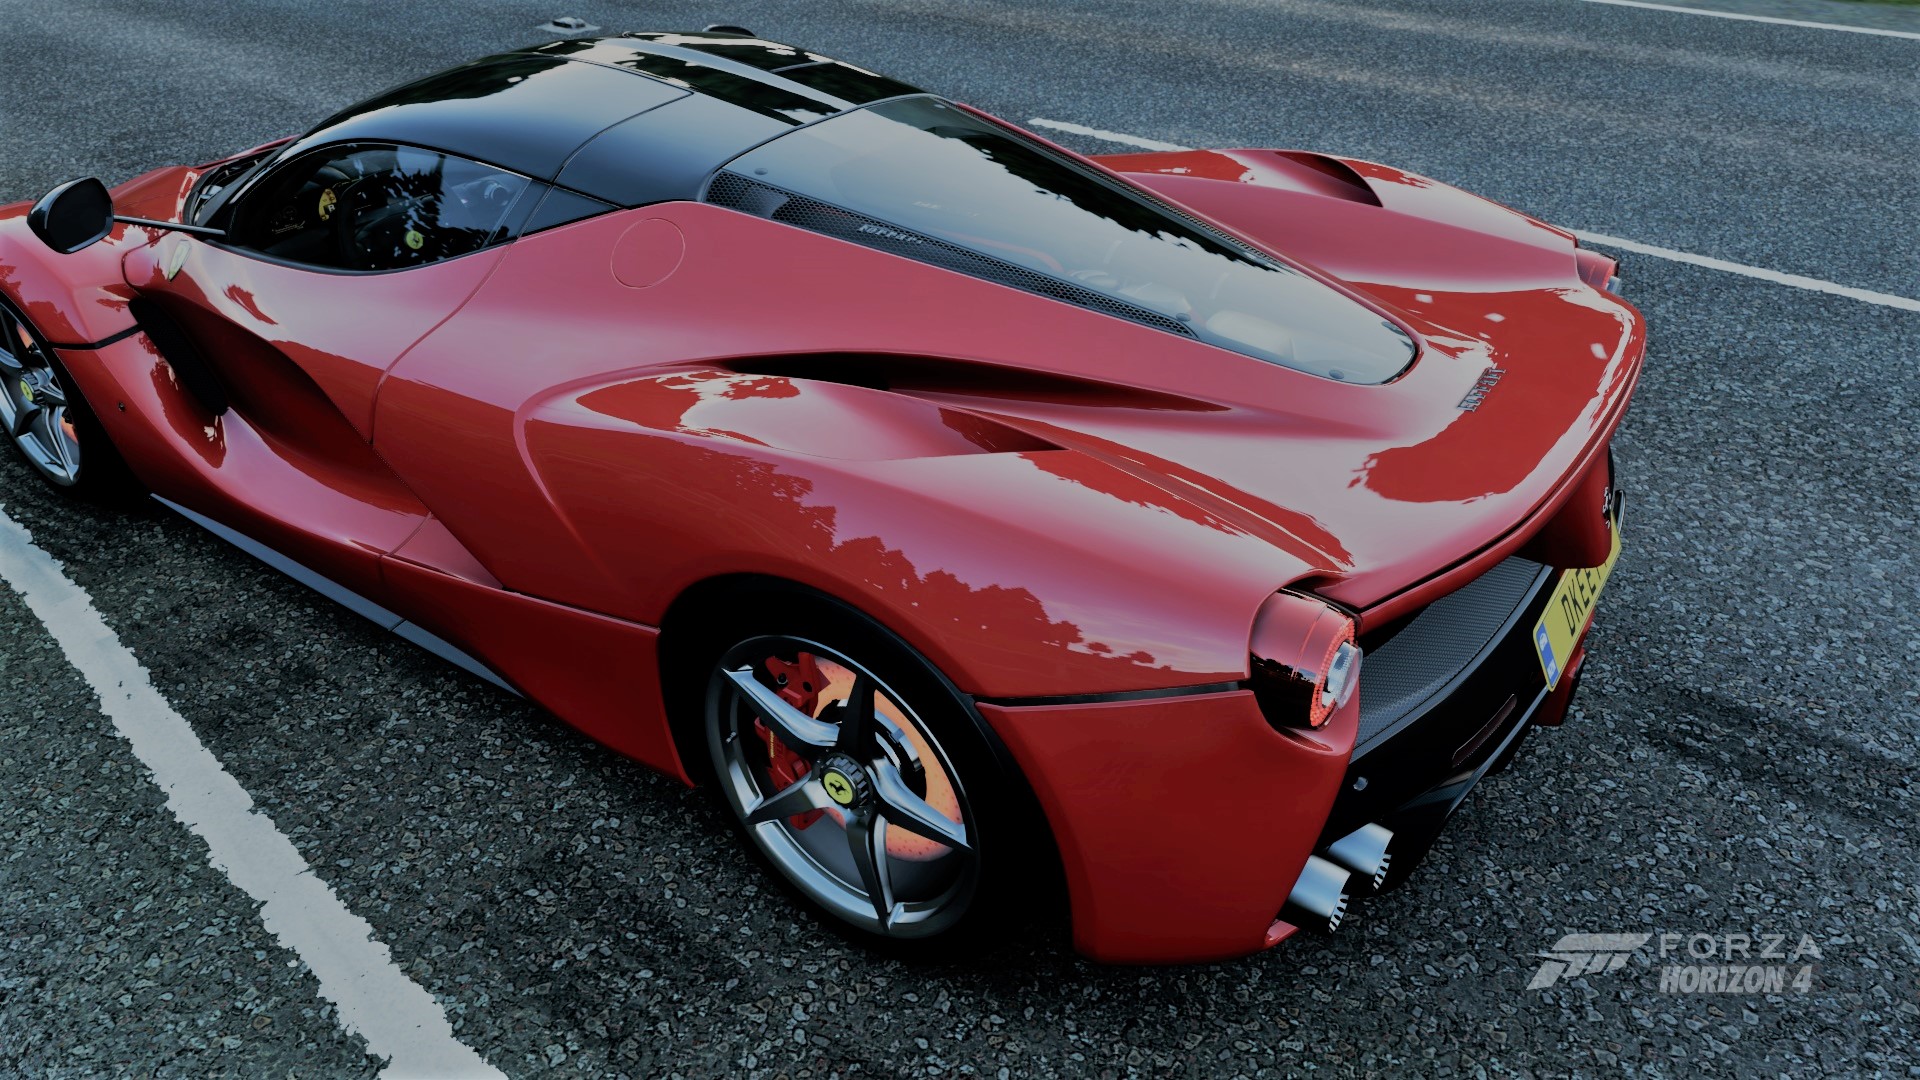 General 1920x1080 Forza Horizon 4 Ferrari red car video games Ferrari LaFerrari high angle